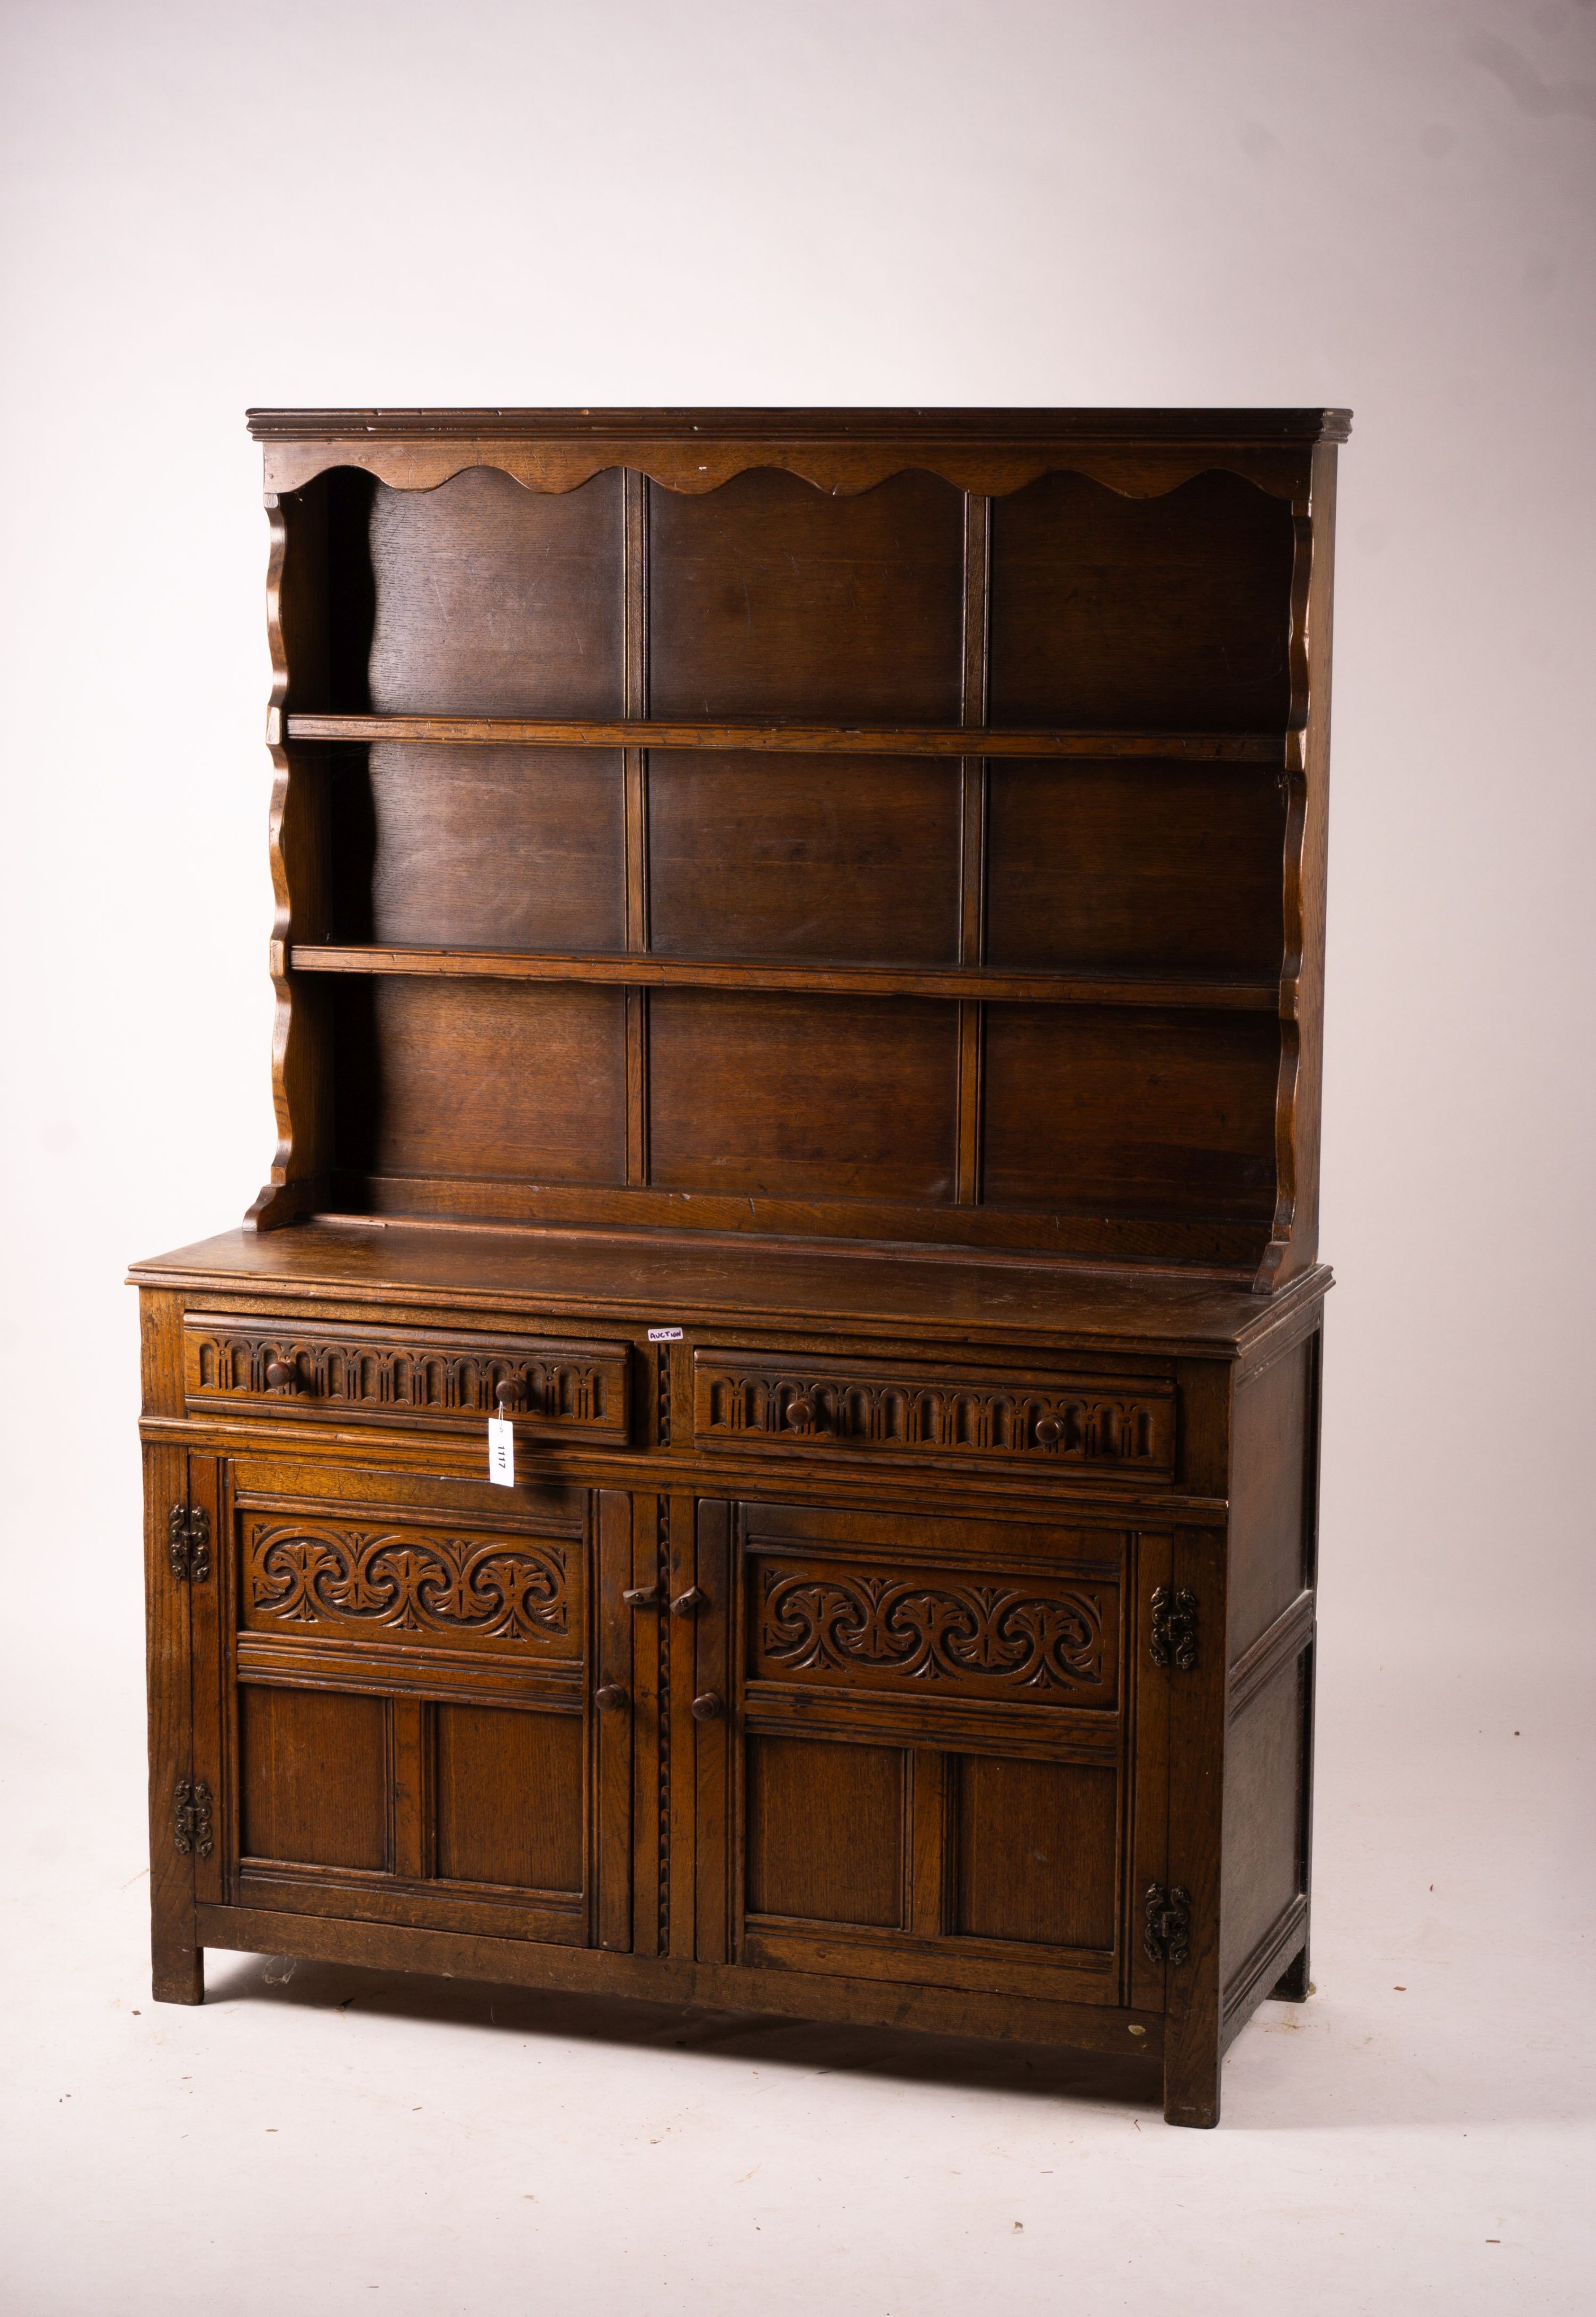 An 18th century style carved oak dresser, width 124cm, depth 46cm, height 175cm